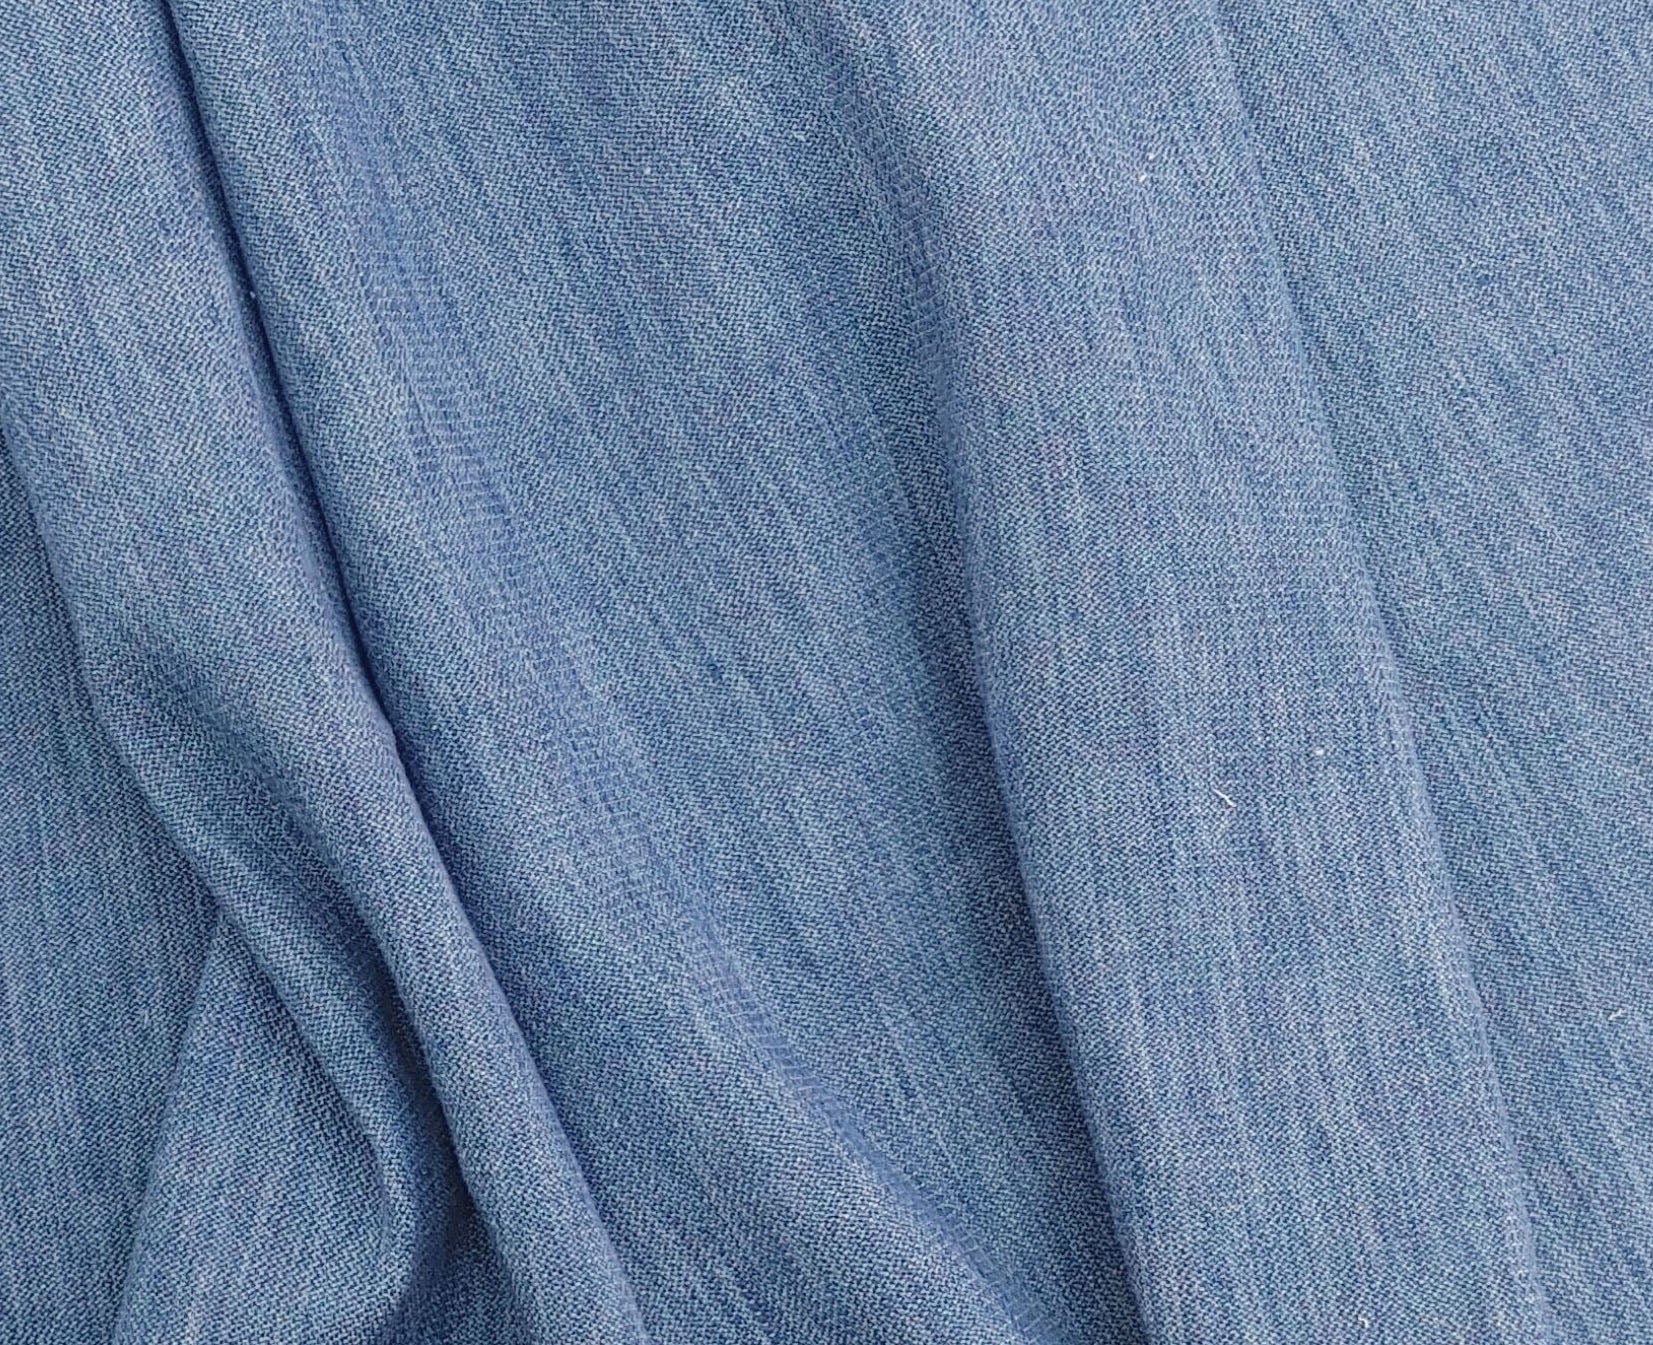 Cool Blue Linen Stretch Fabric 7204 - The Linen Lab - Blue